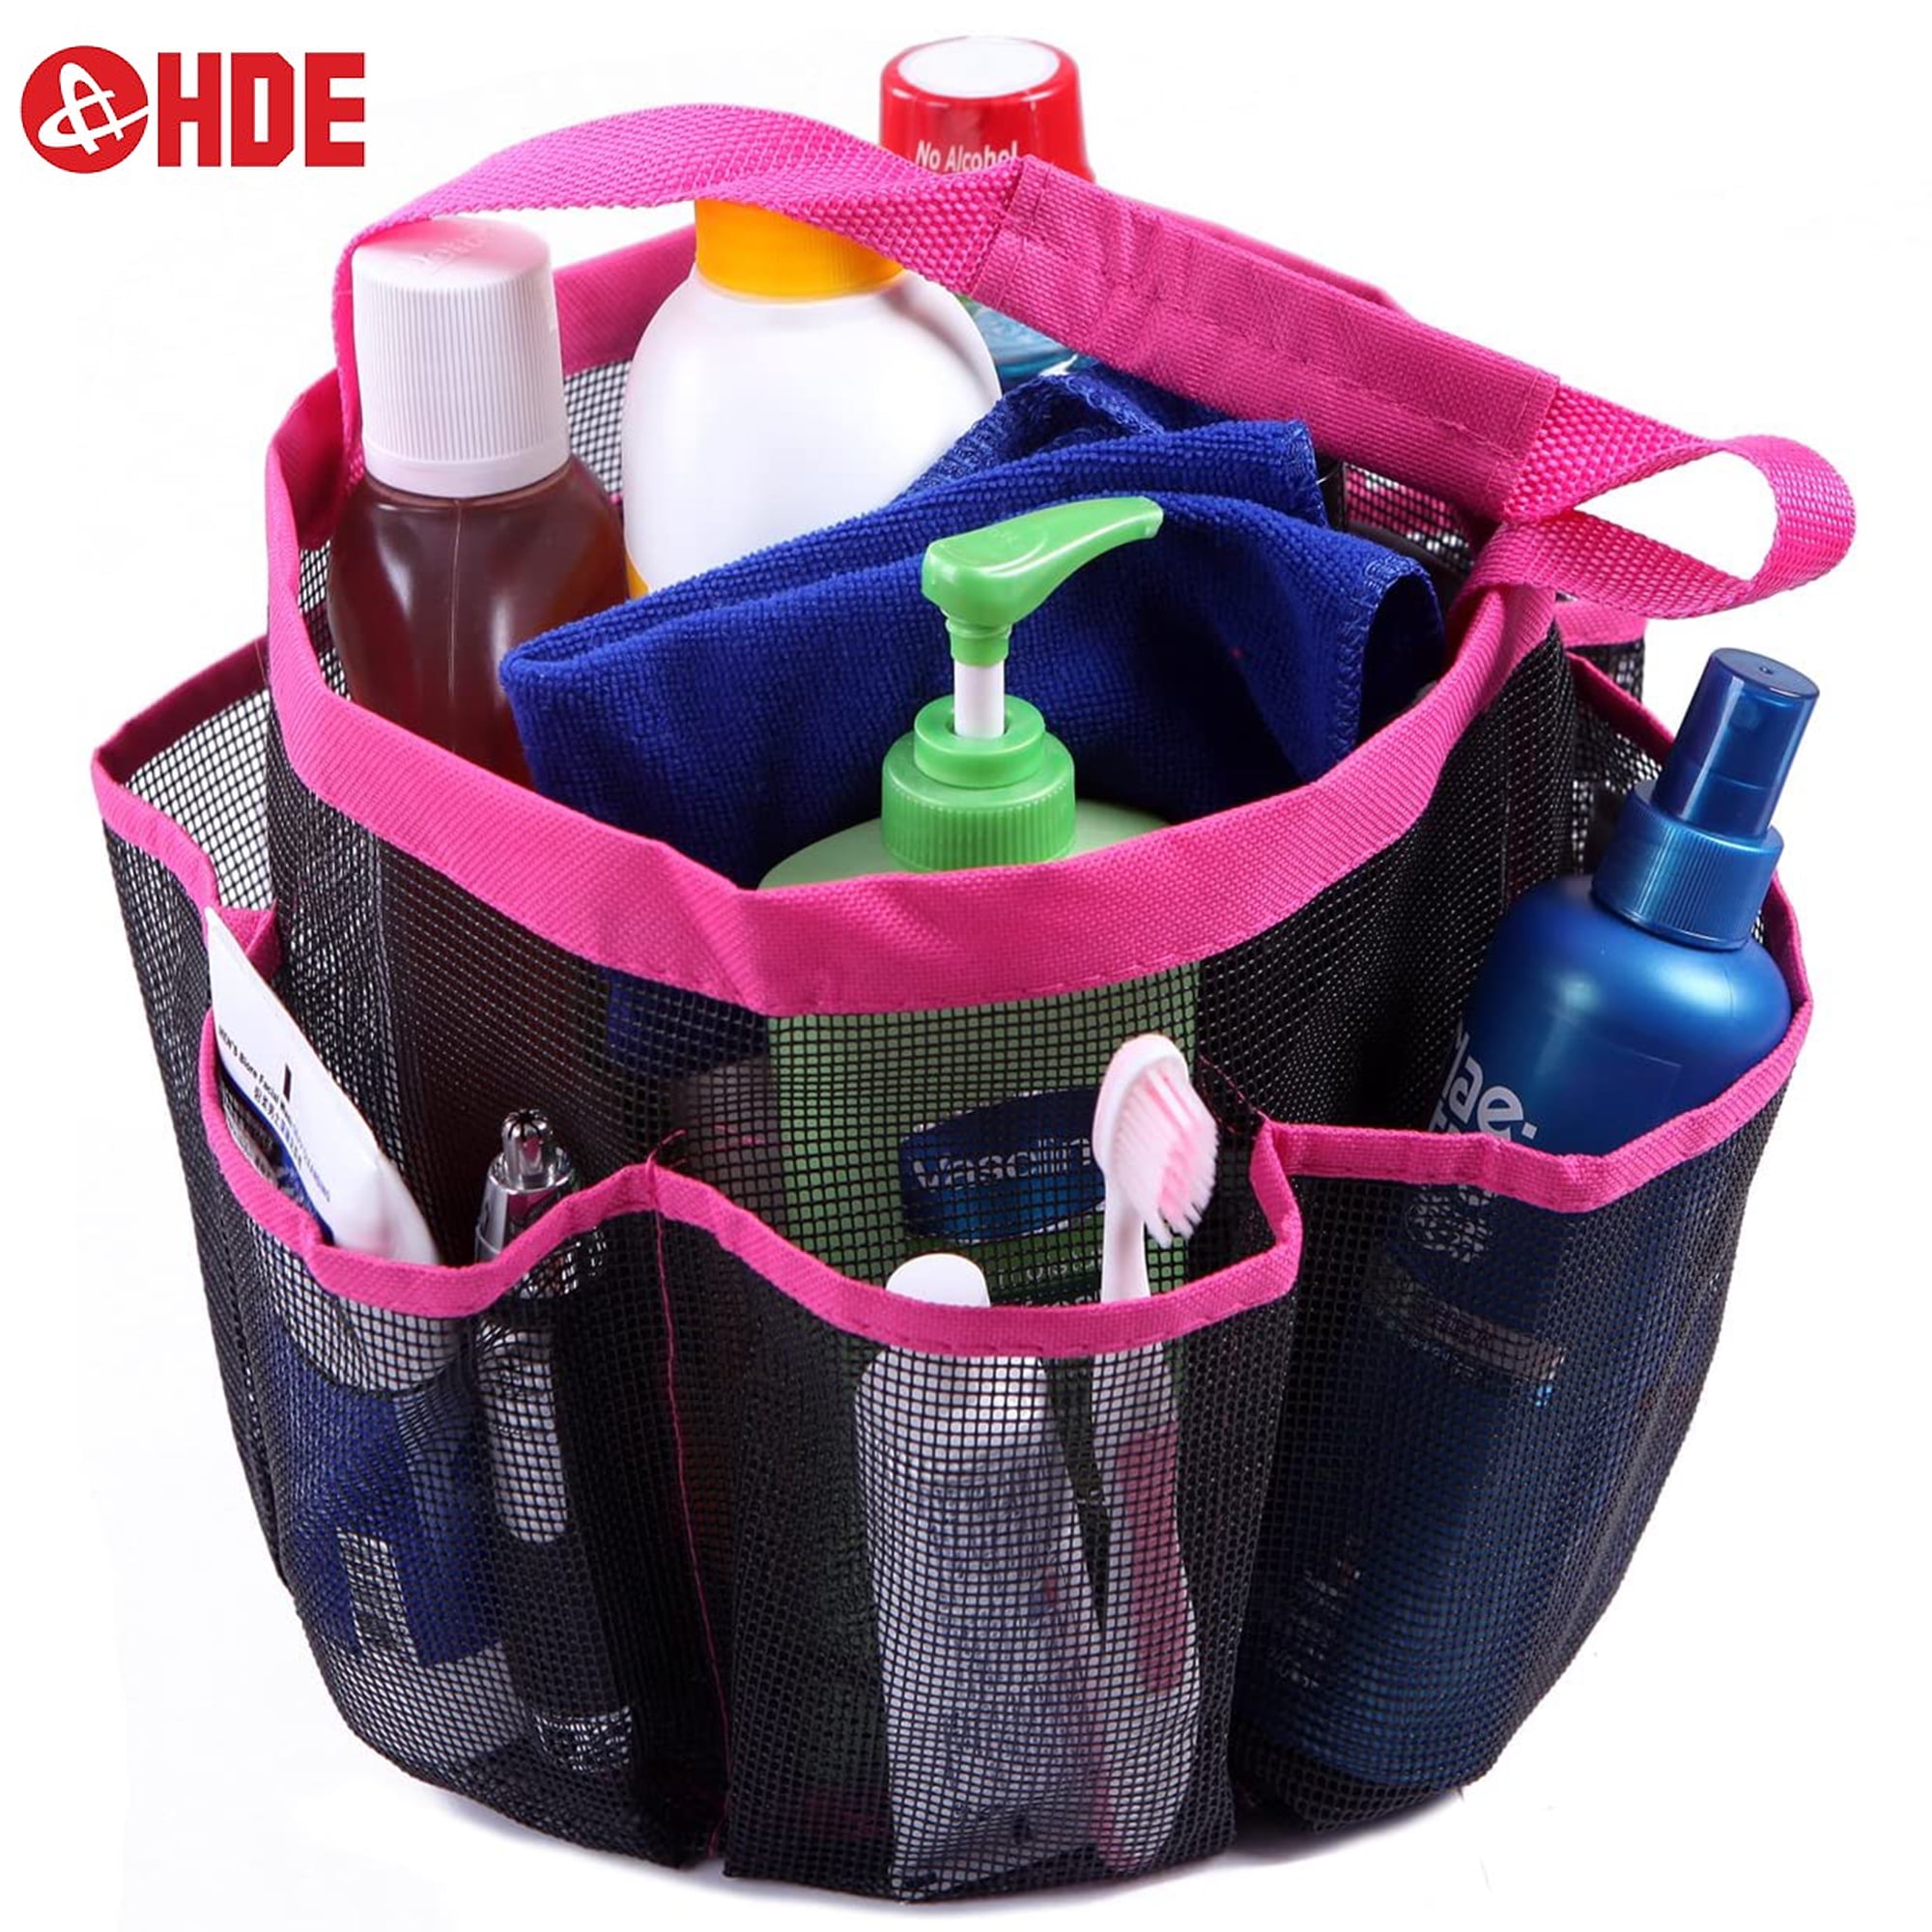 HDE Mesh Shower Bag Caddy Bath Organizer Pink 